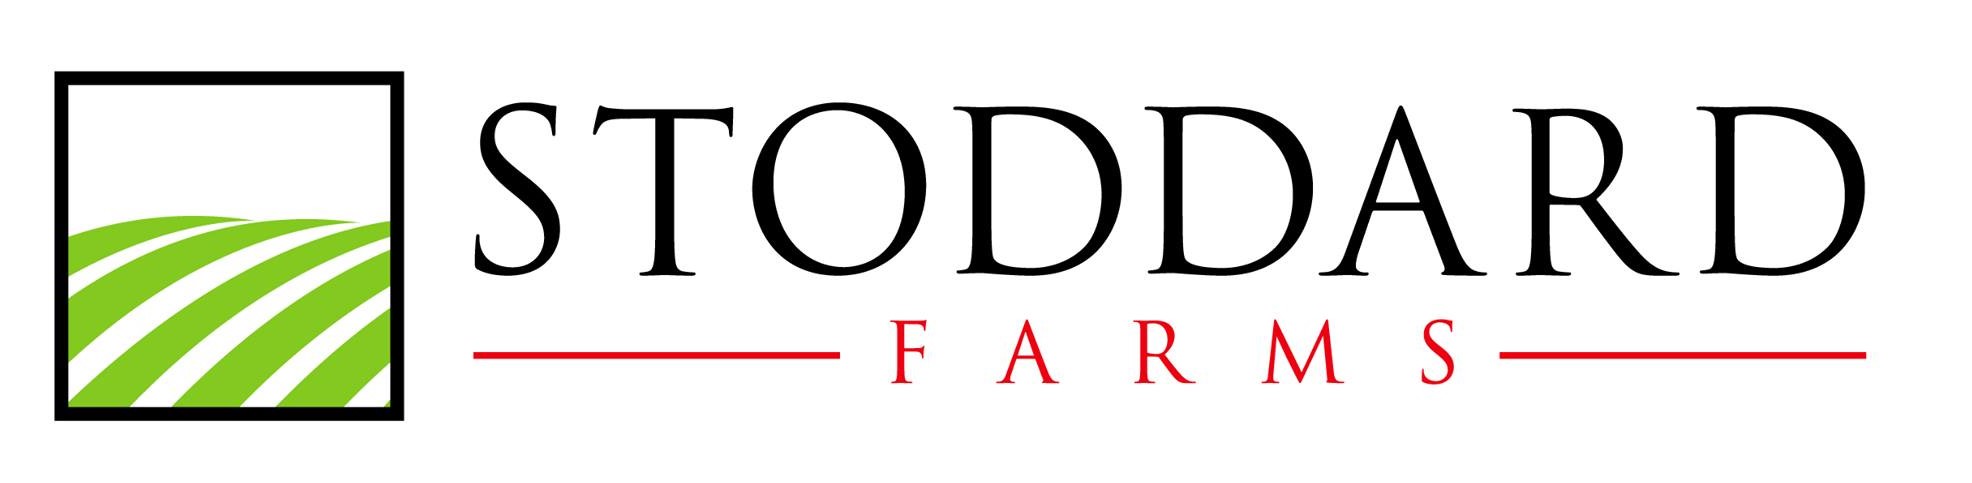 STODDARD FARMS